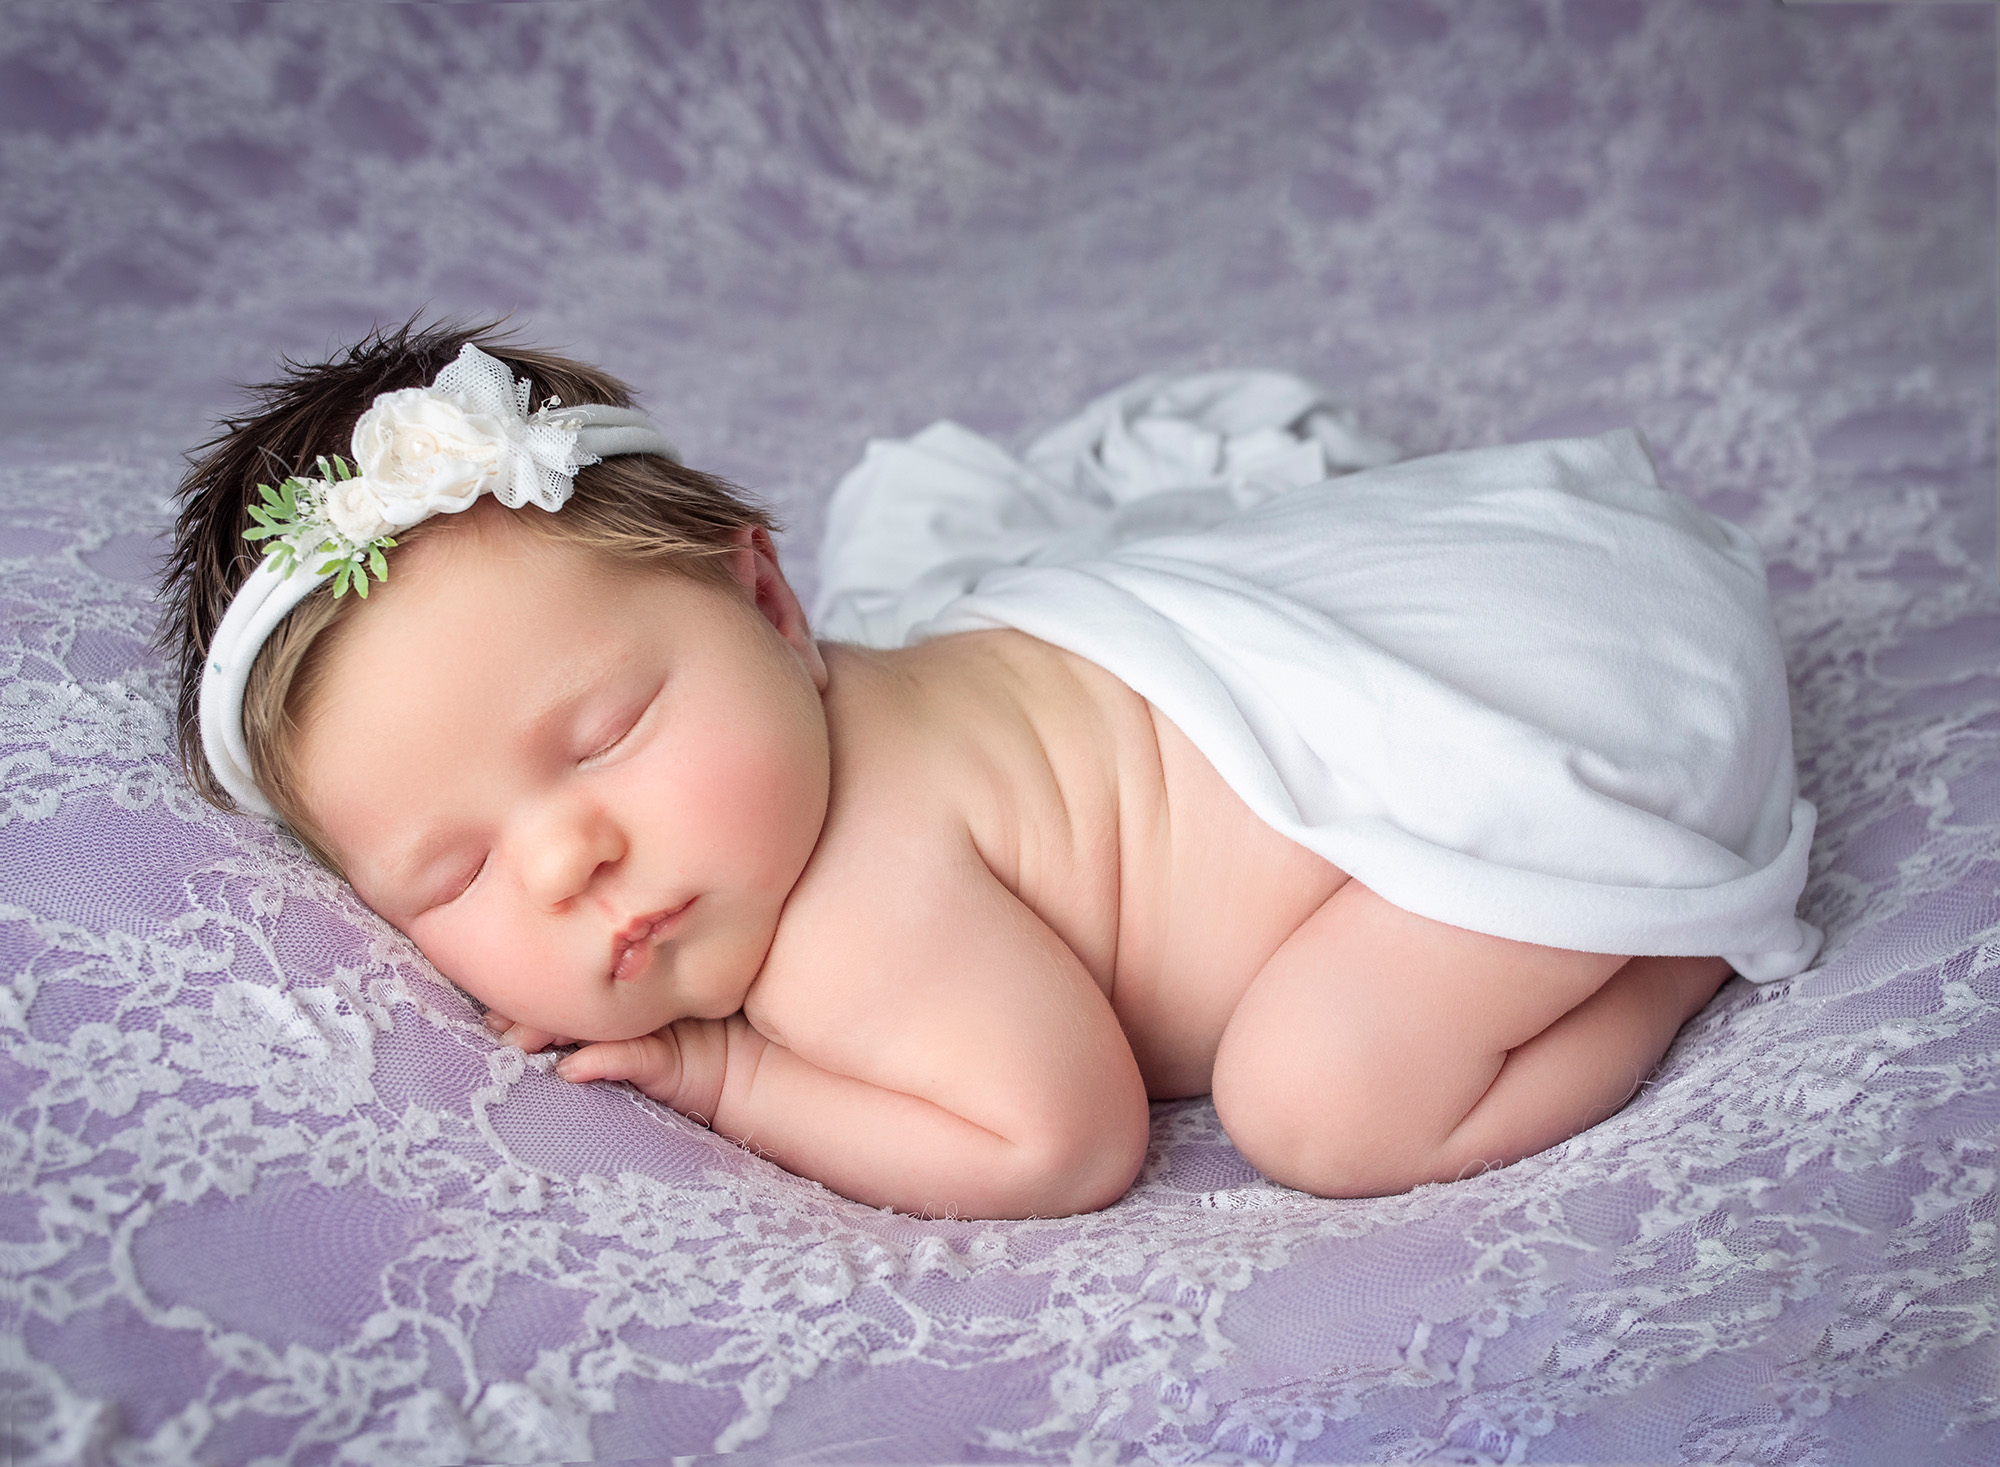 newborn baby girl asleep on purple laced blanket wearing white headband and wrap